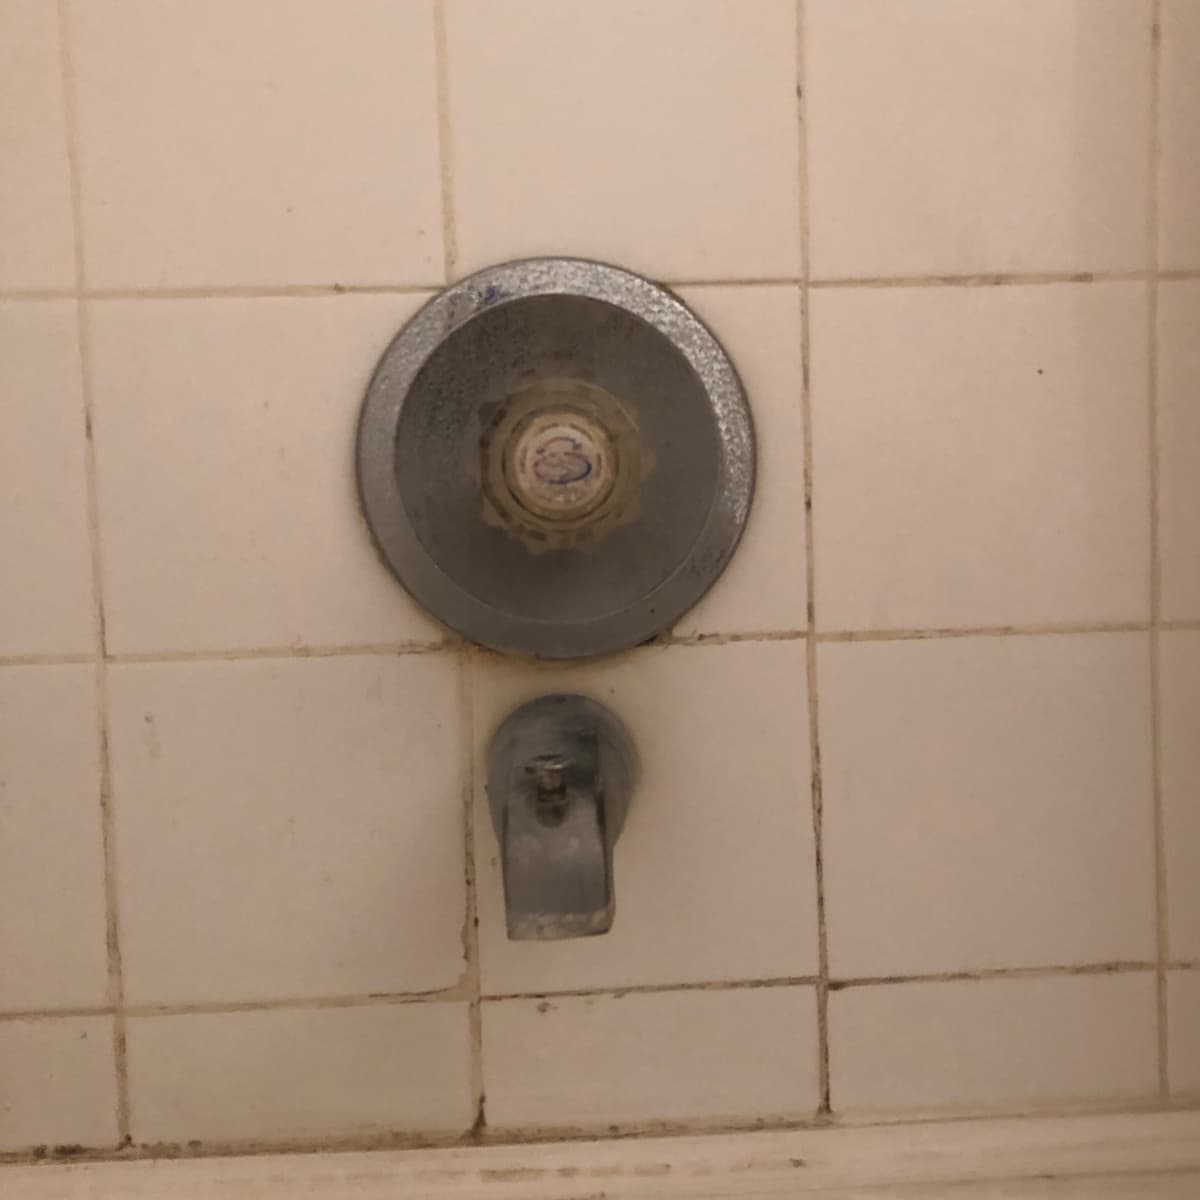 Replace A Single Handle Shower Valve, How To Fix A Broken Bathtub Faucet Handle